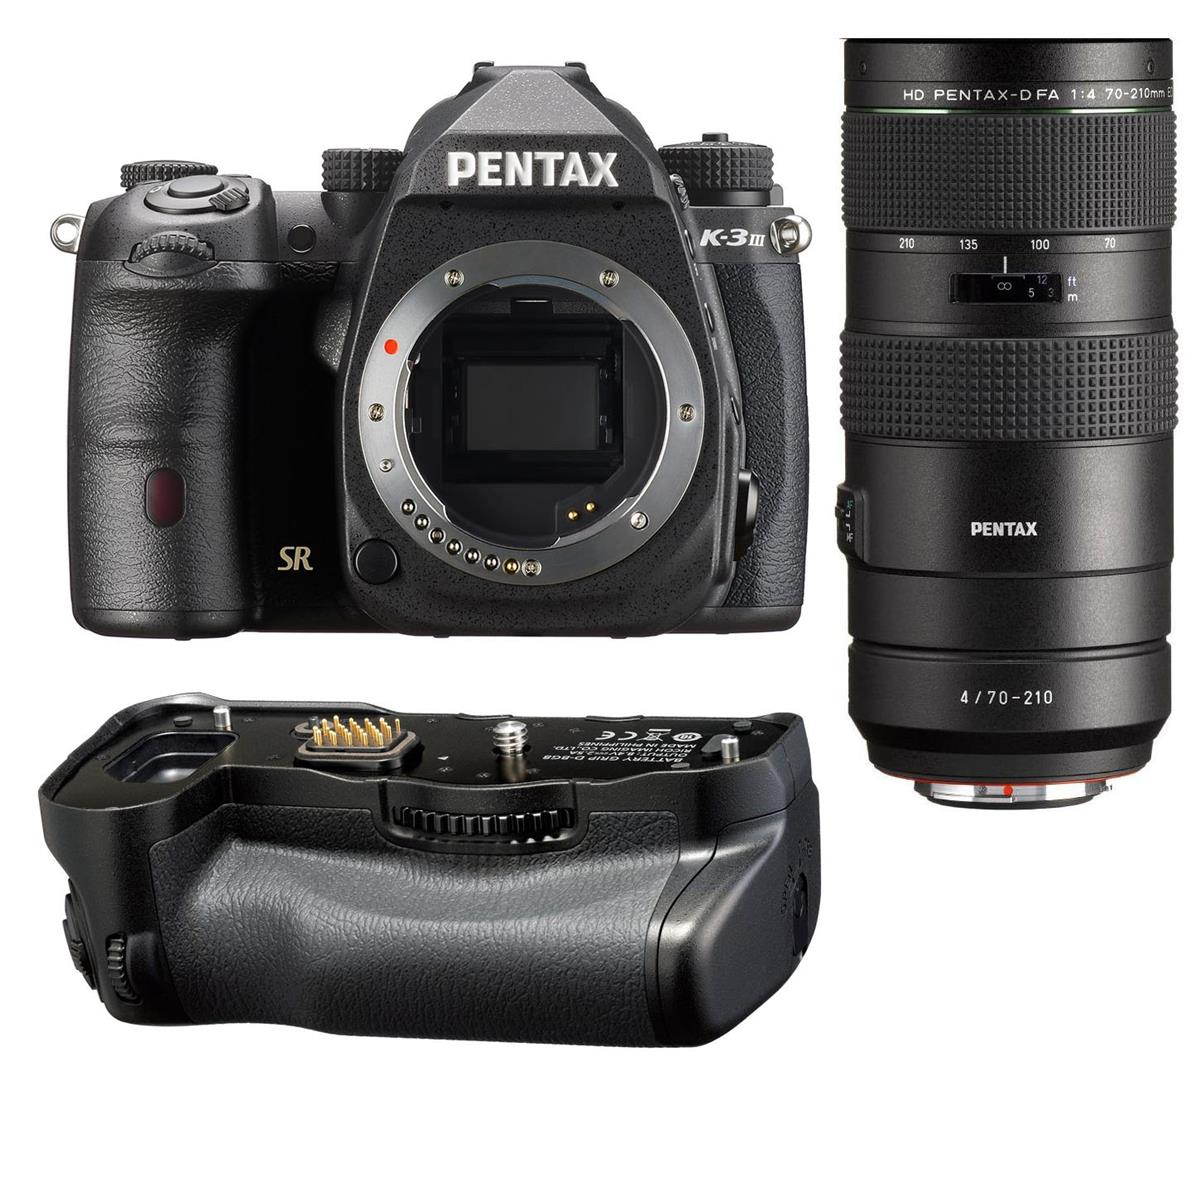 Image of Pentax K-3 Mark III DSLR Camera